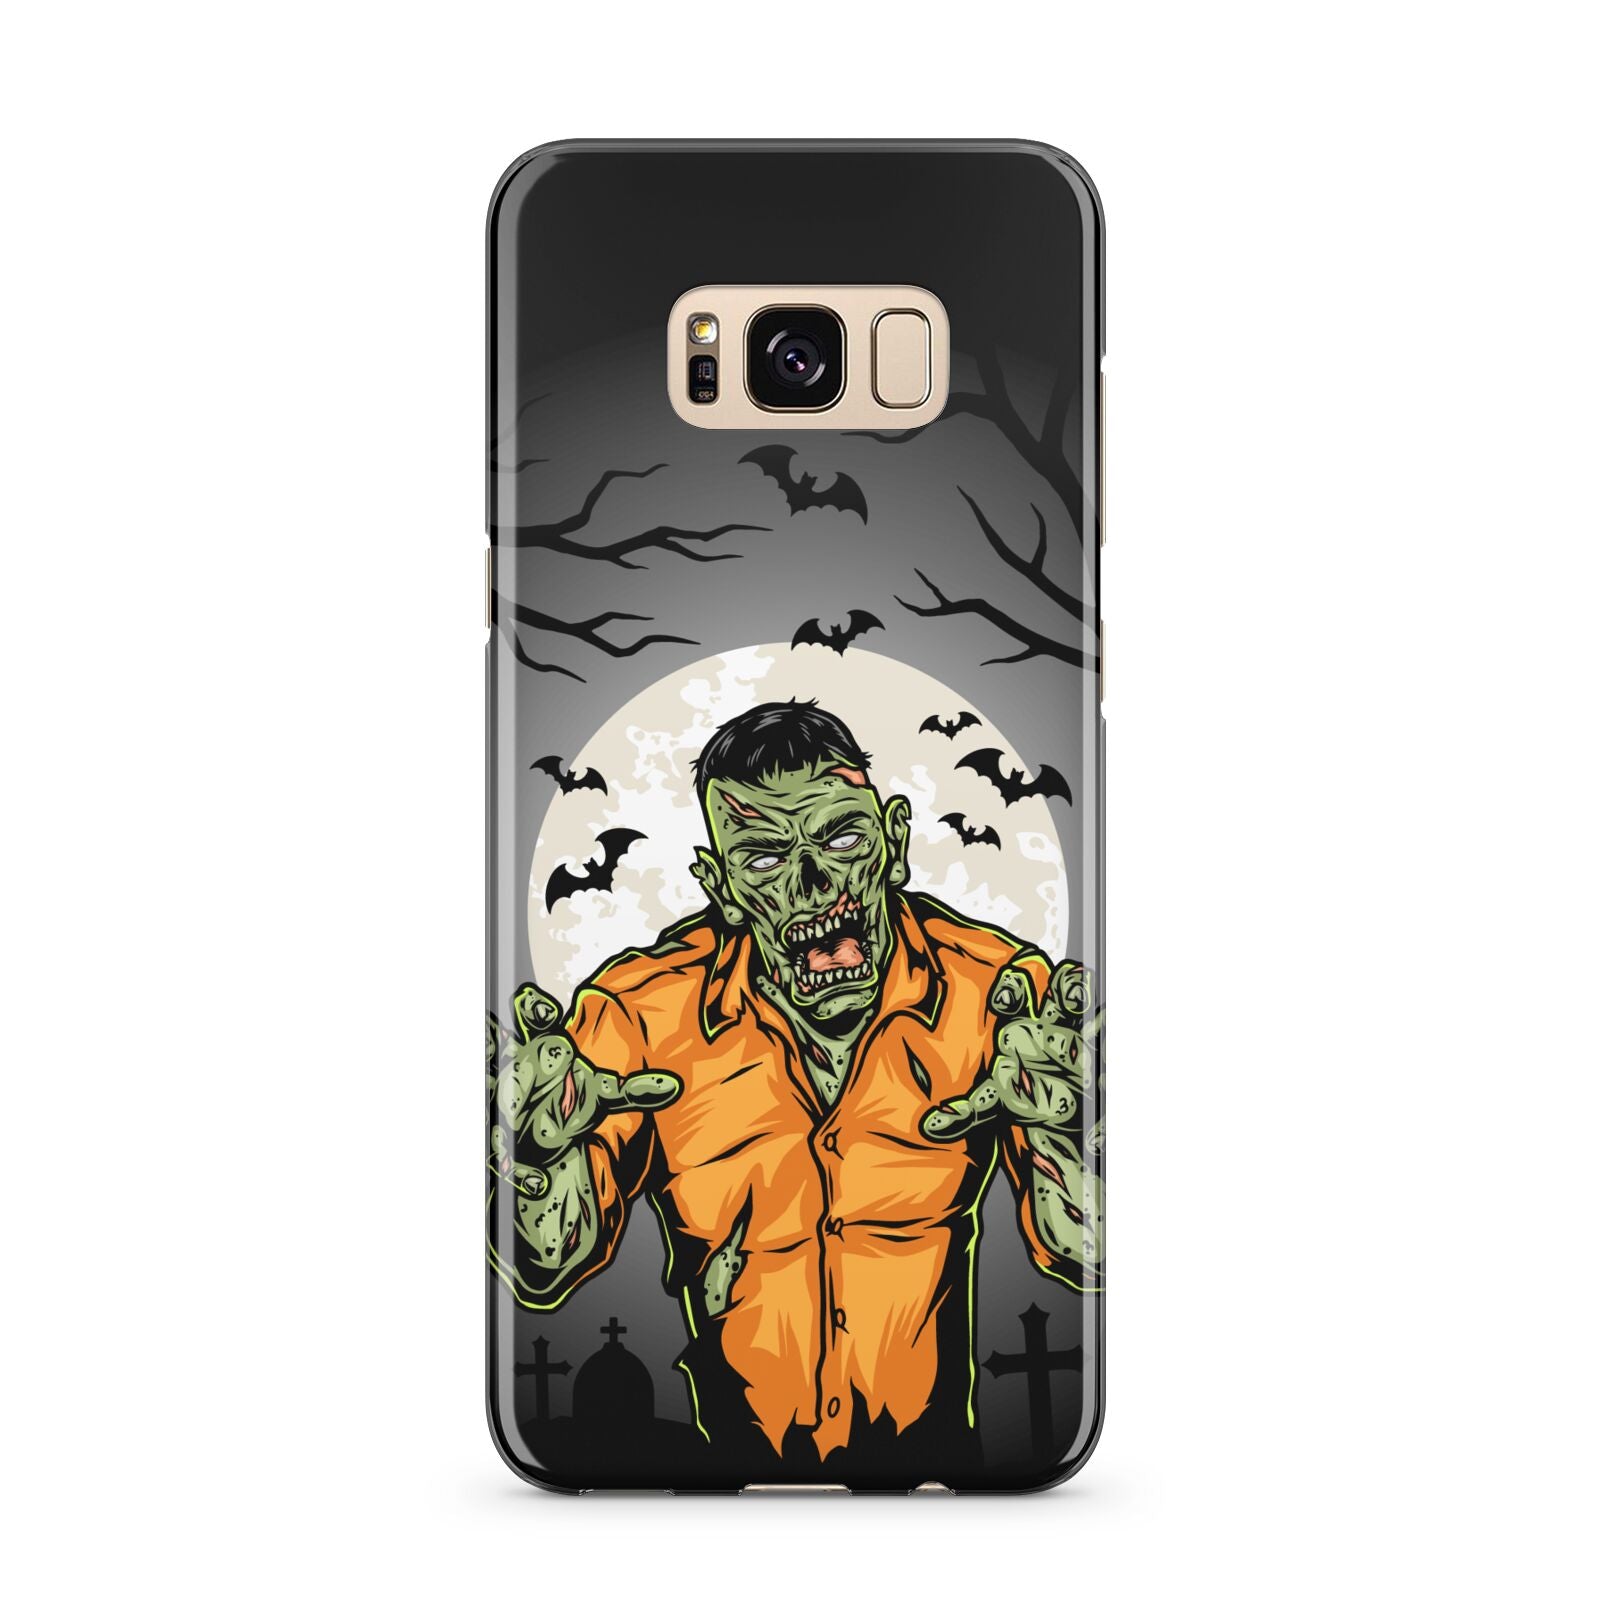 Zombie Night Samsung Galaxy S8 Plus Case